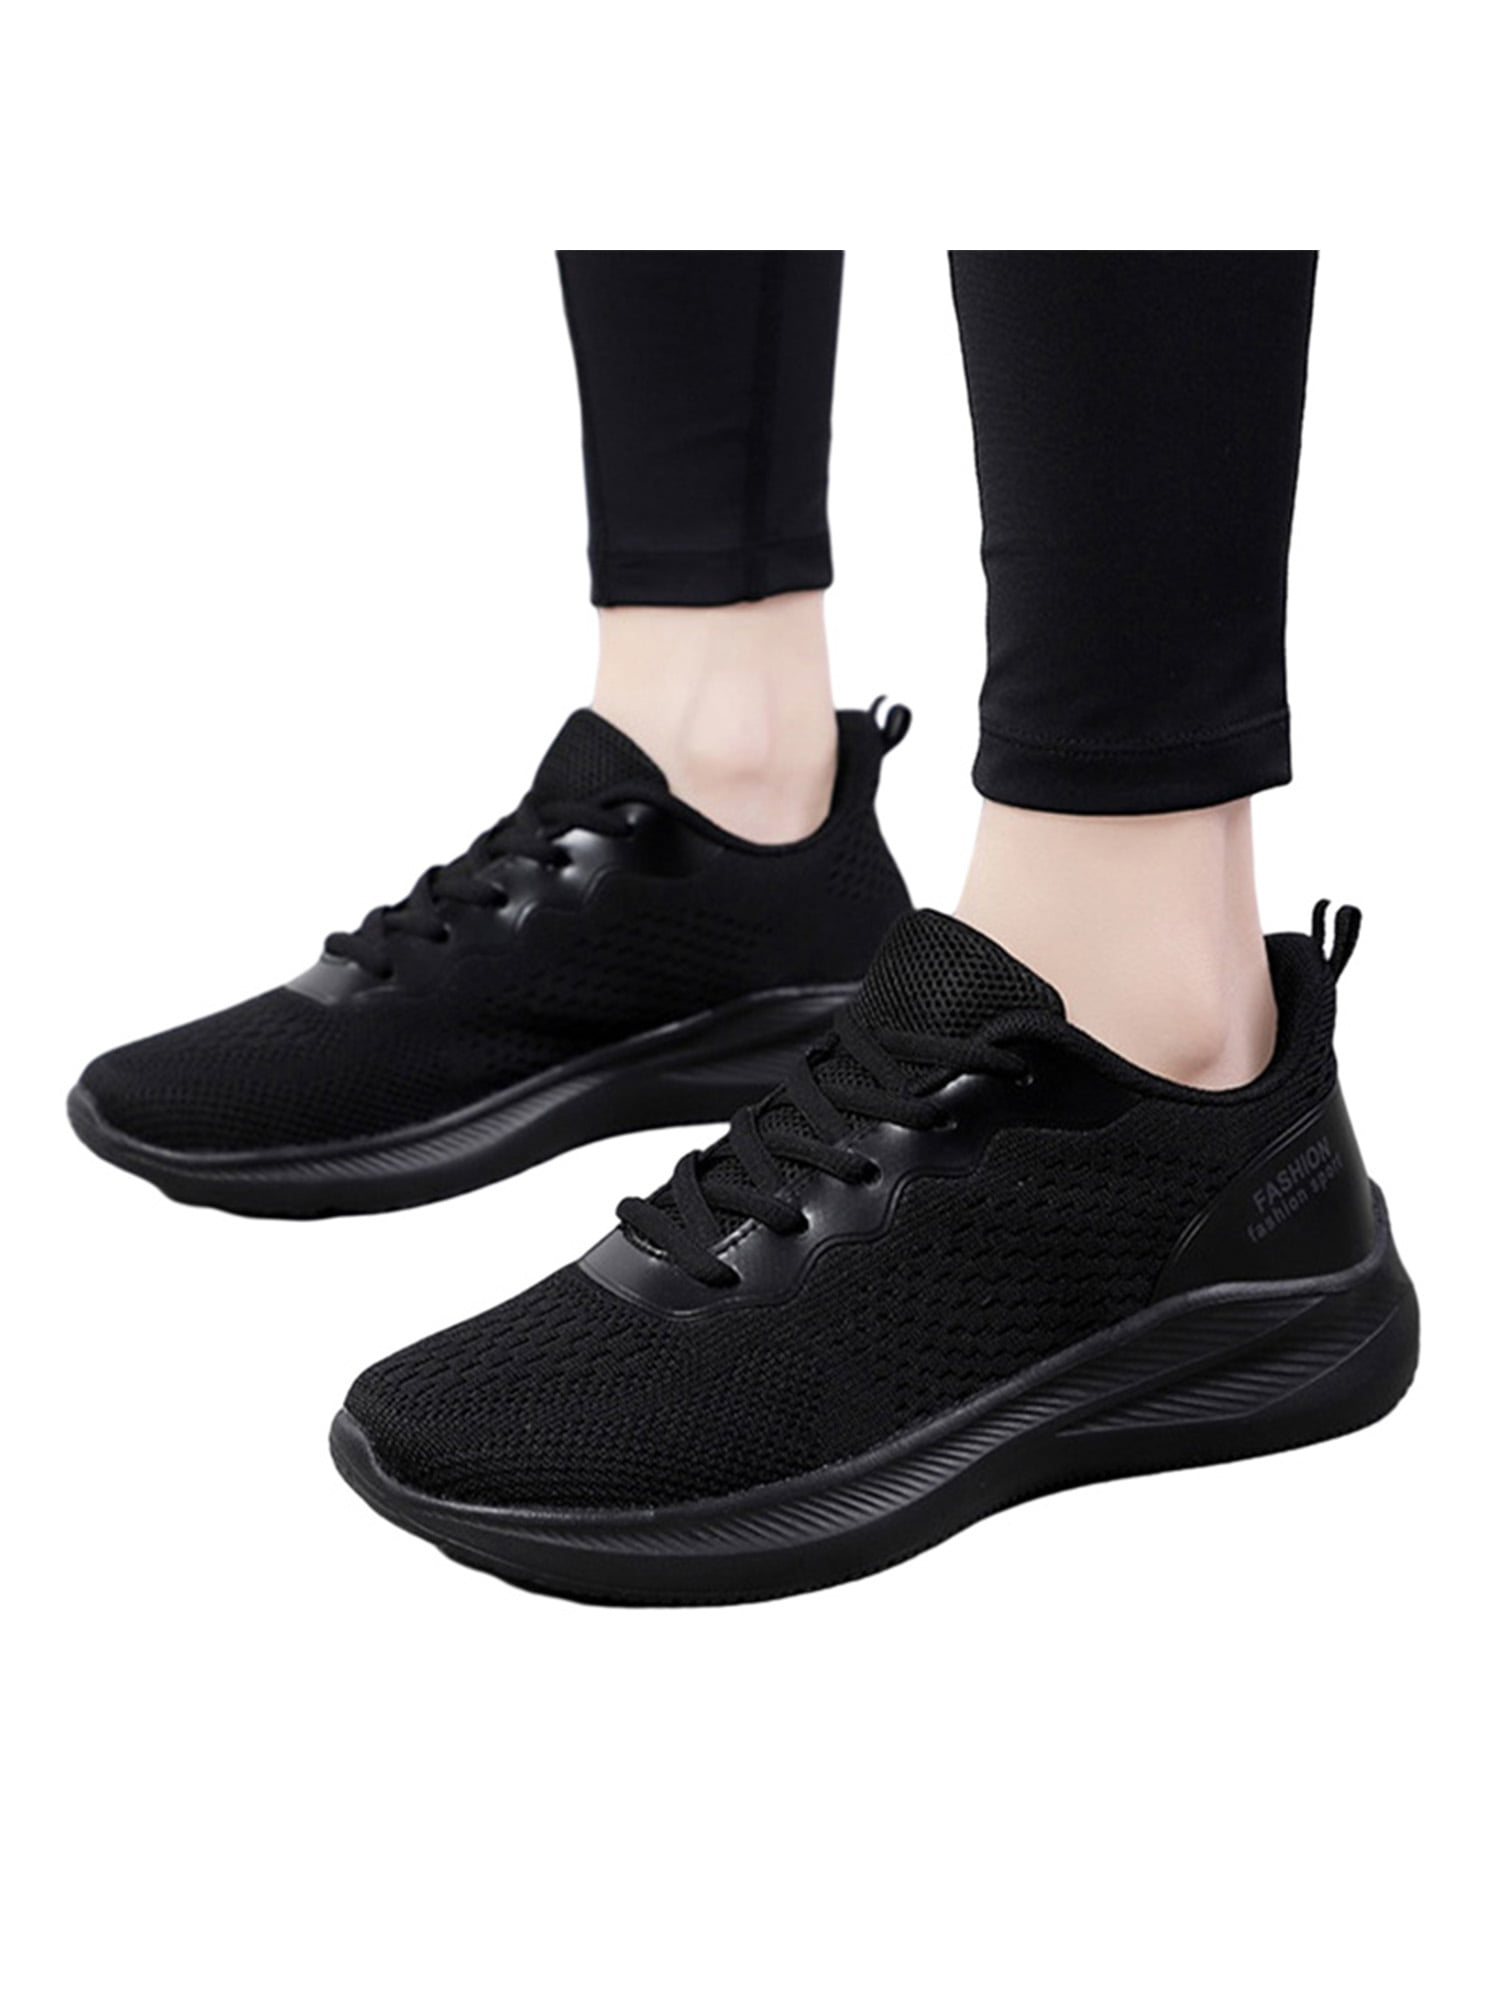 UKAP Slip Resistant Work Shoes for Women Walking Non Slip Wide Width ...